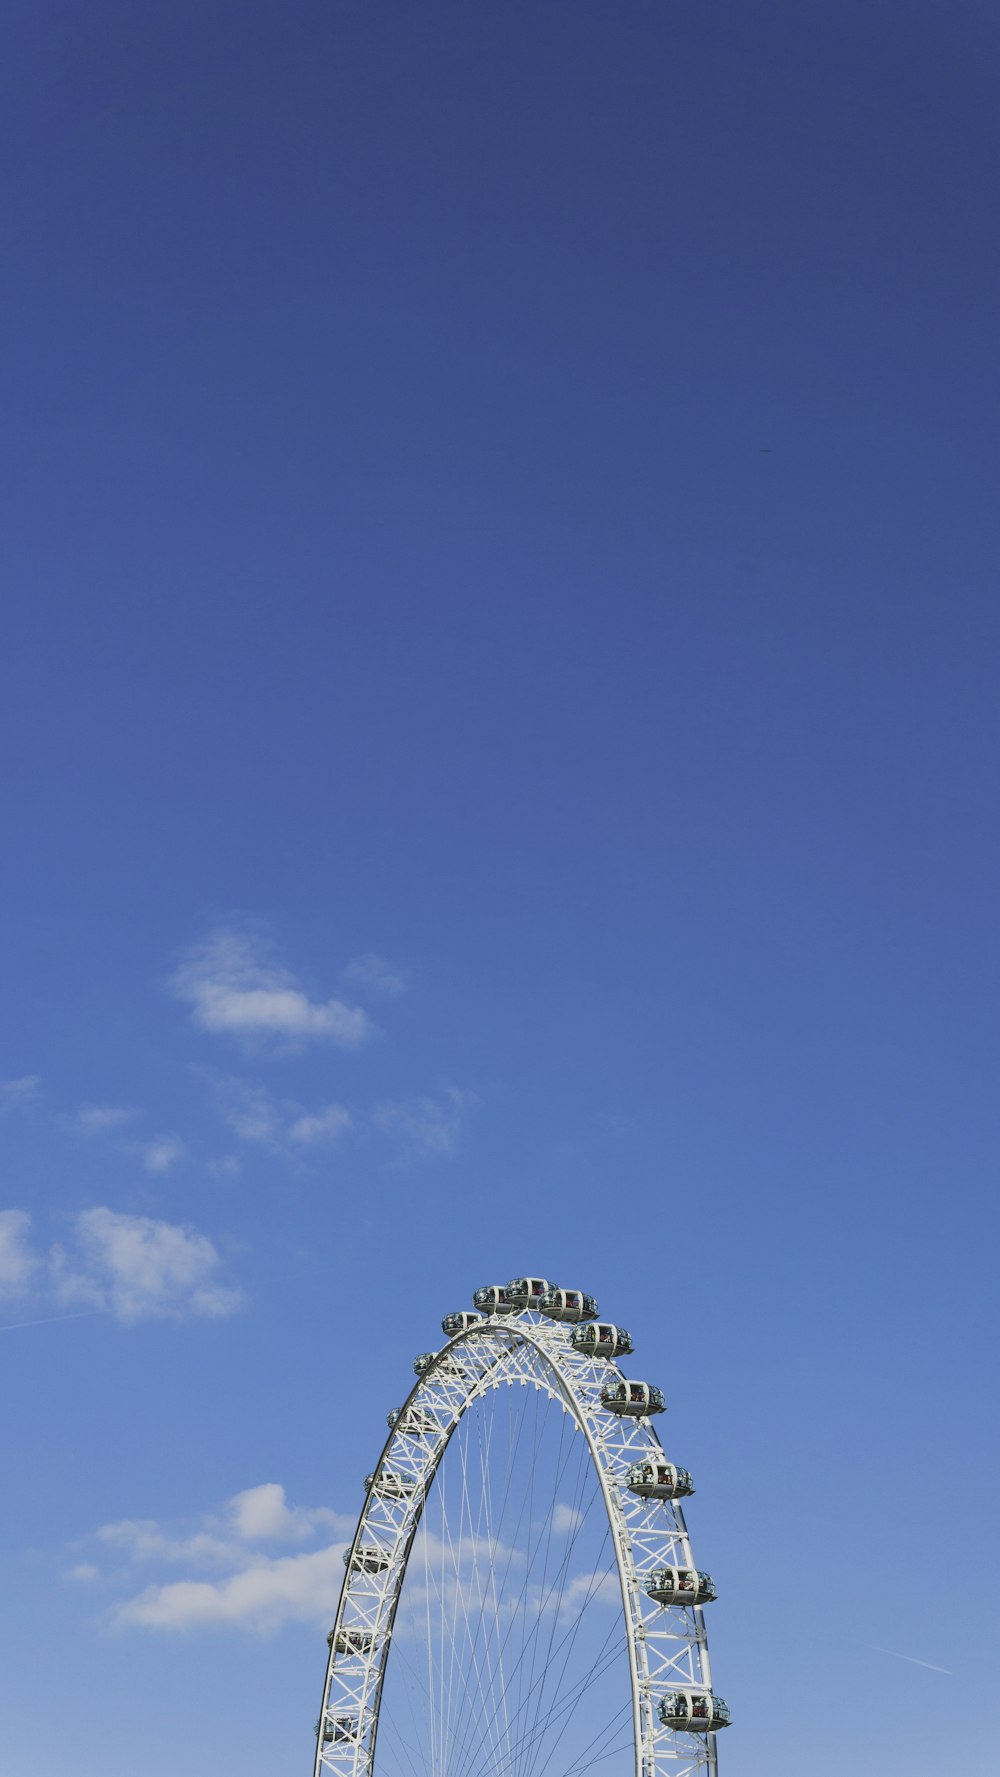 Ferris wheel during day